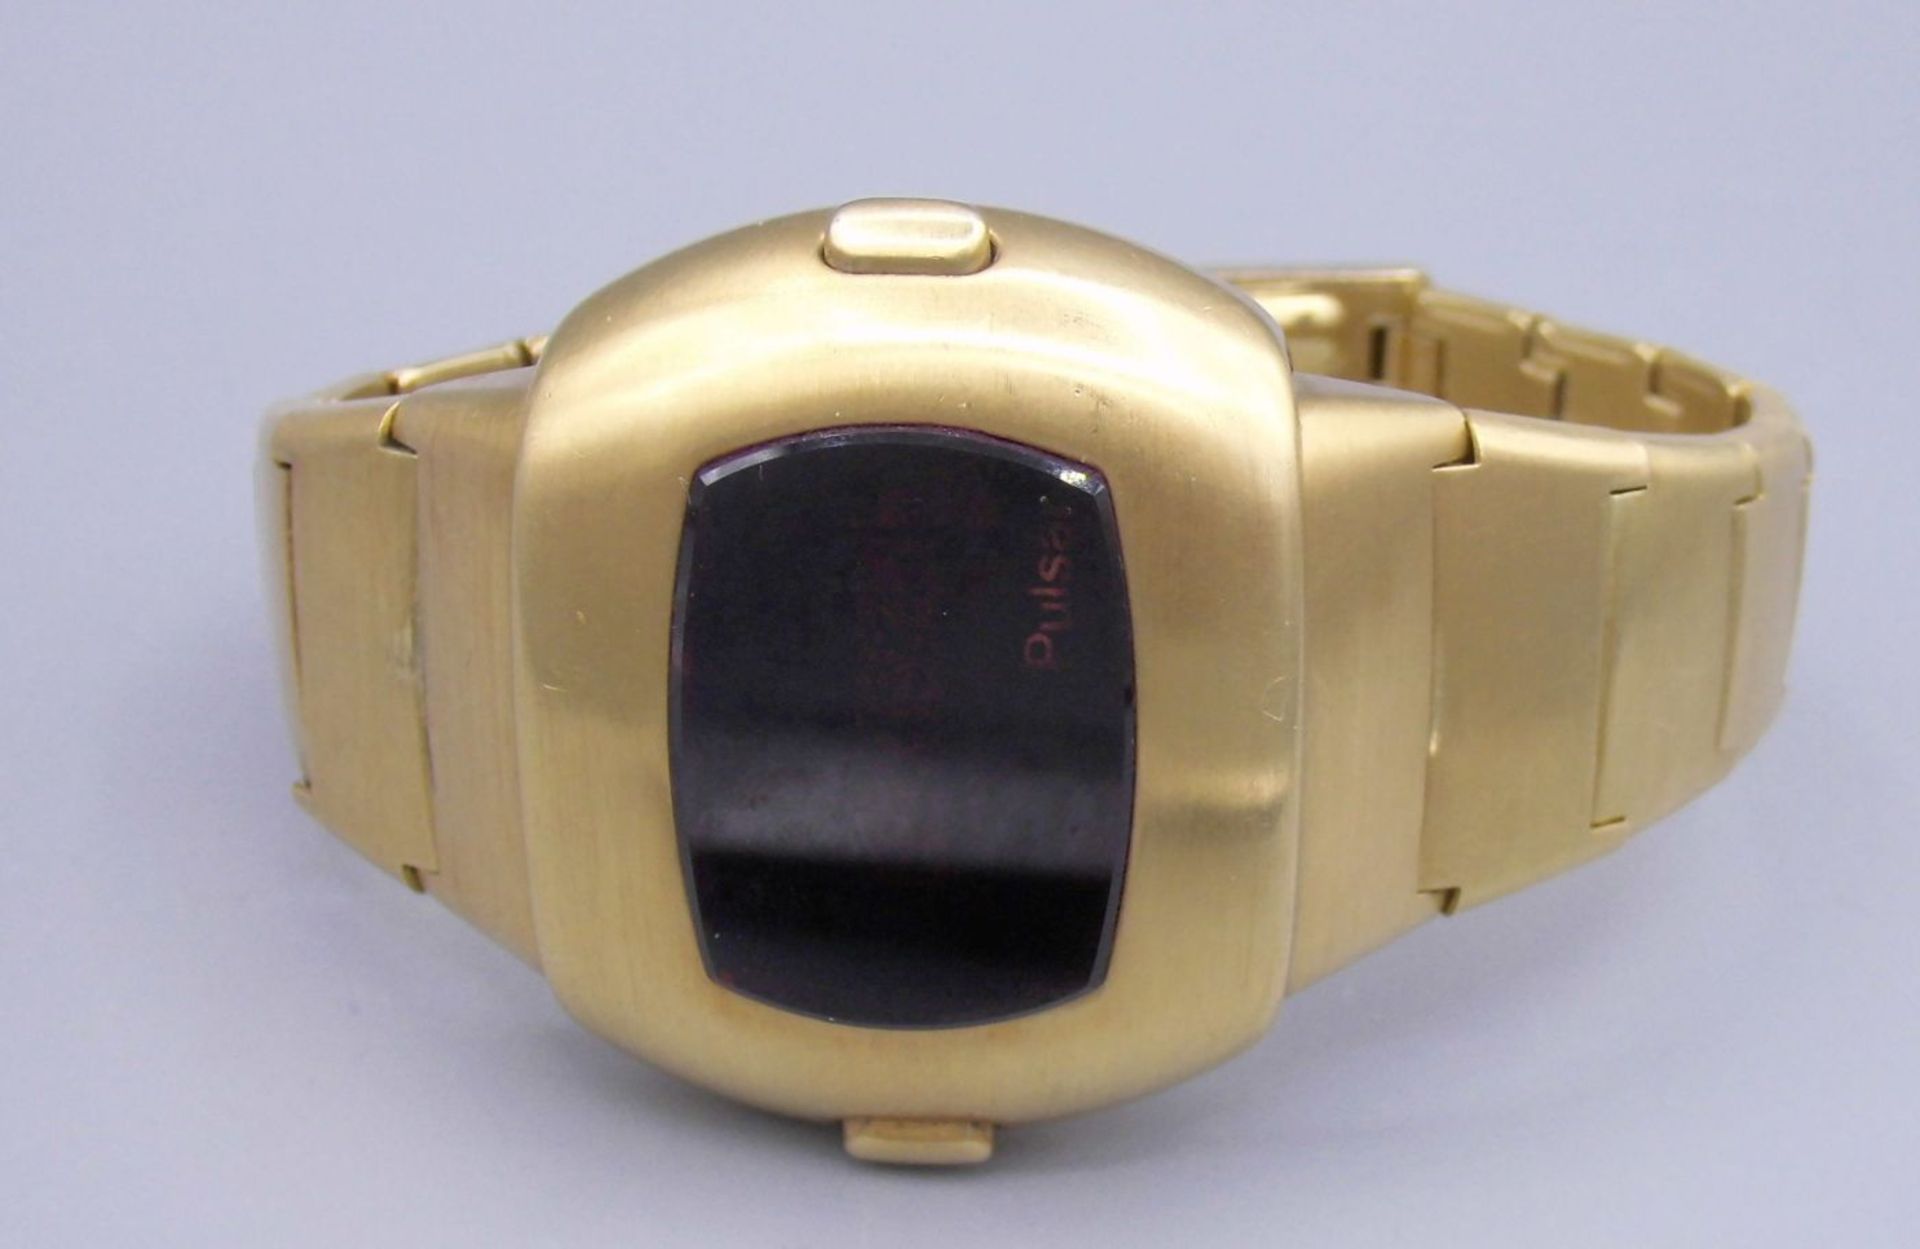 GOLDENE ARMBANDUHR / DIGITALUHR : Pulsar P3 "Date Command" / digital watch, 1970er Jahre, Gehäuse - Image 2 of 7